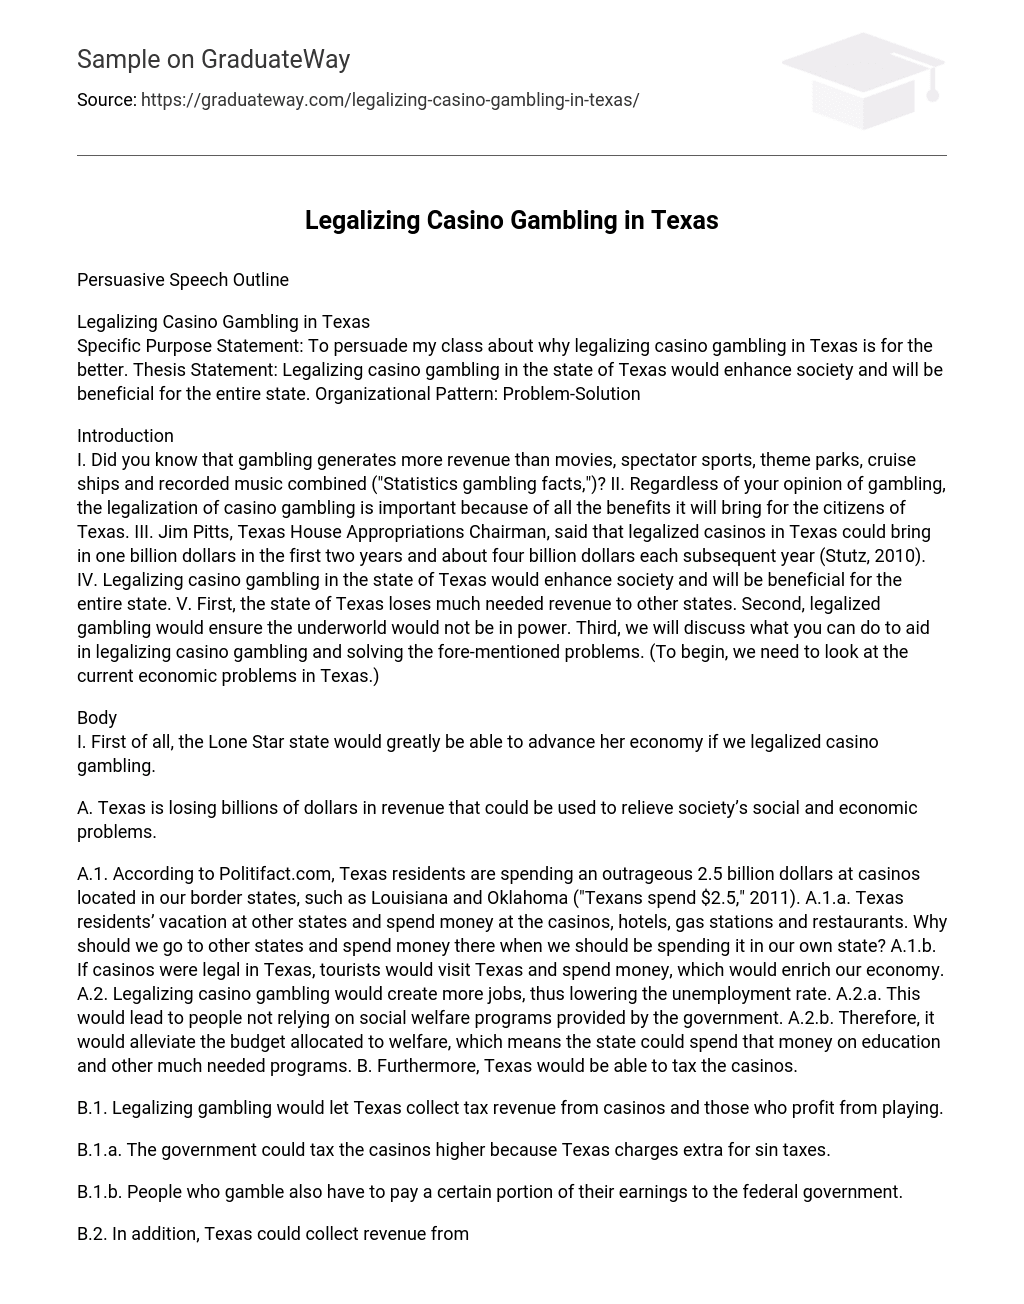 Legalizing Casino Gambling in Texas